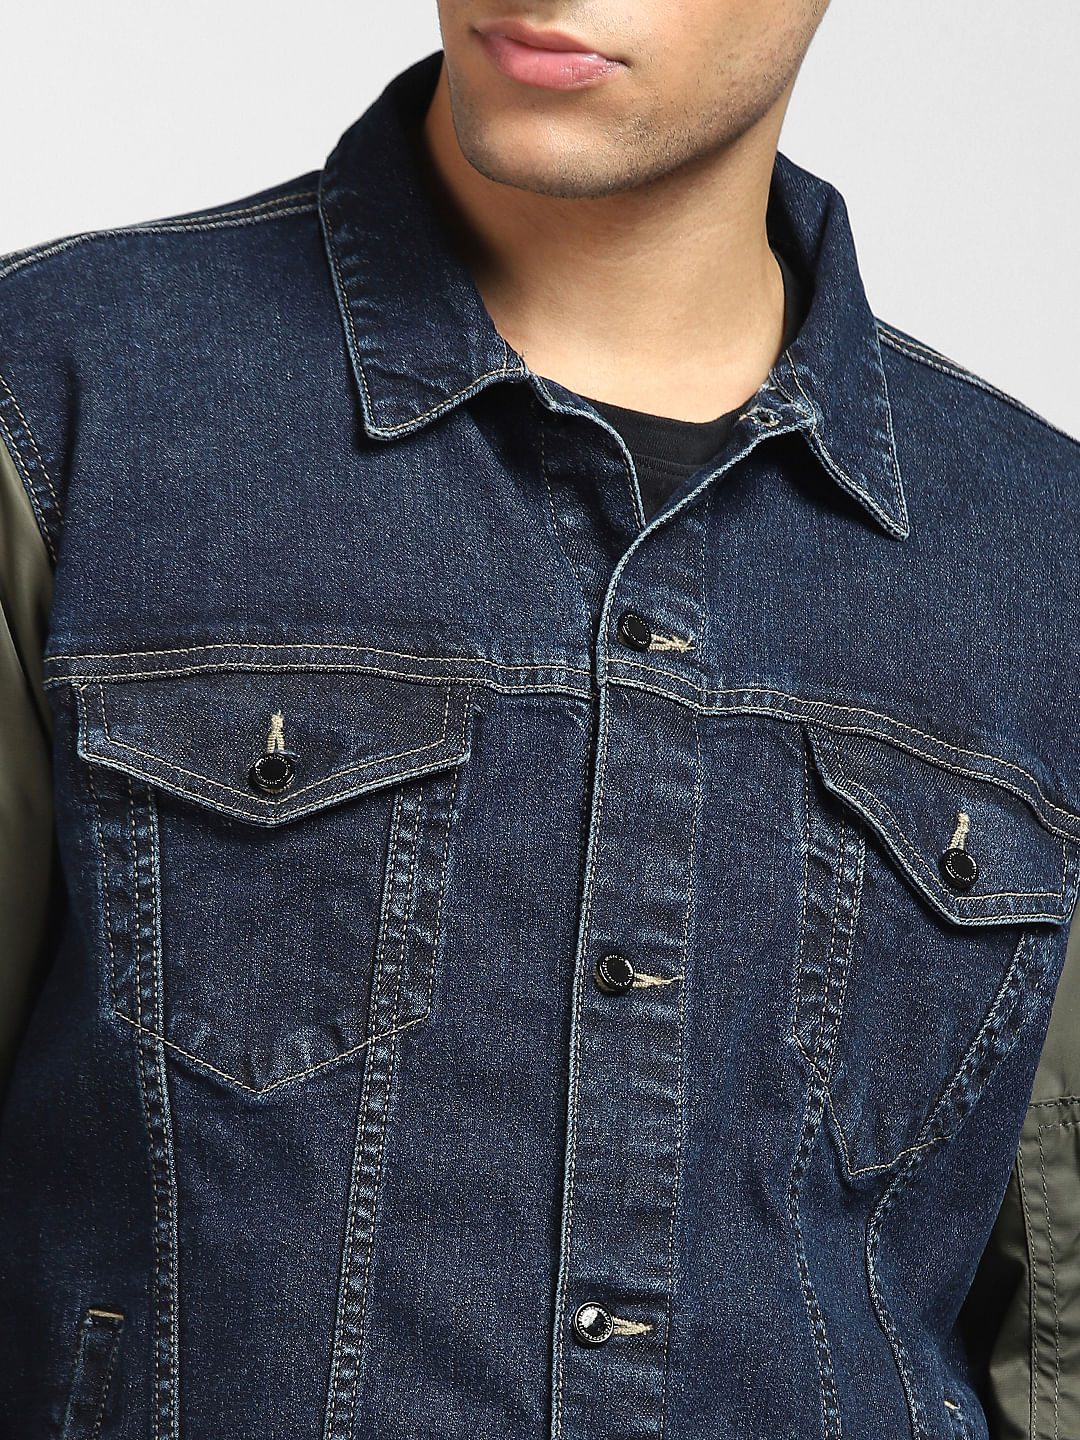 How to Wear a Jean Jacket | Personal Styling | Stitch Fix